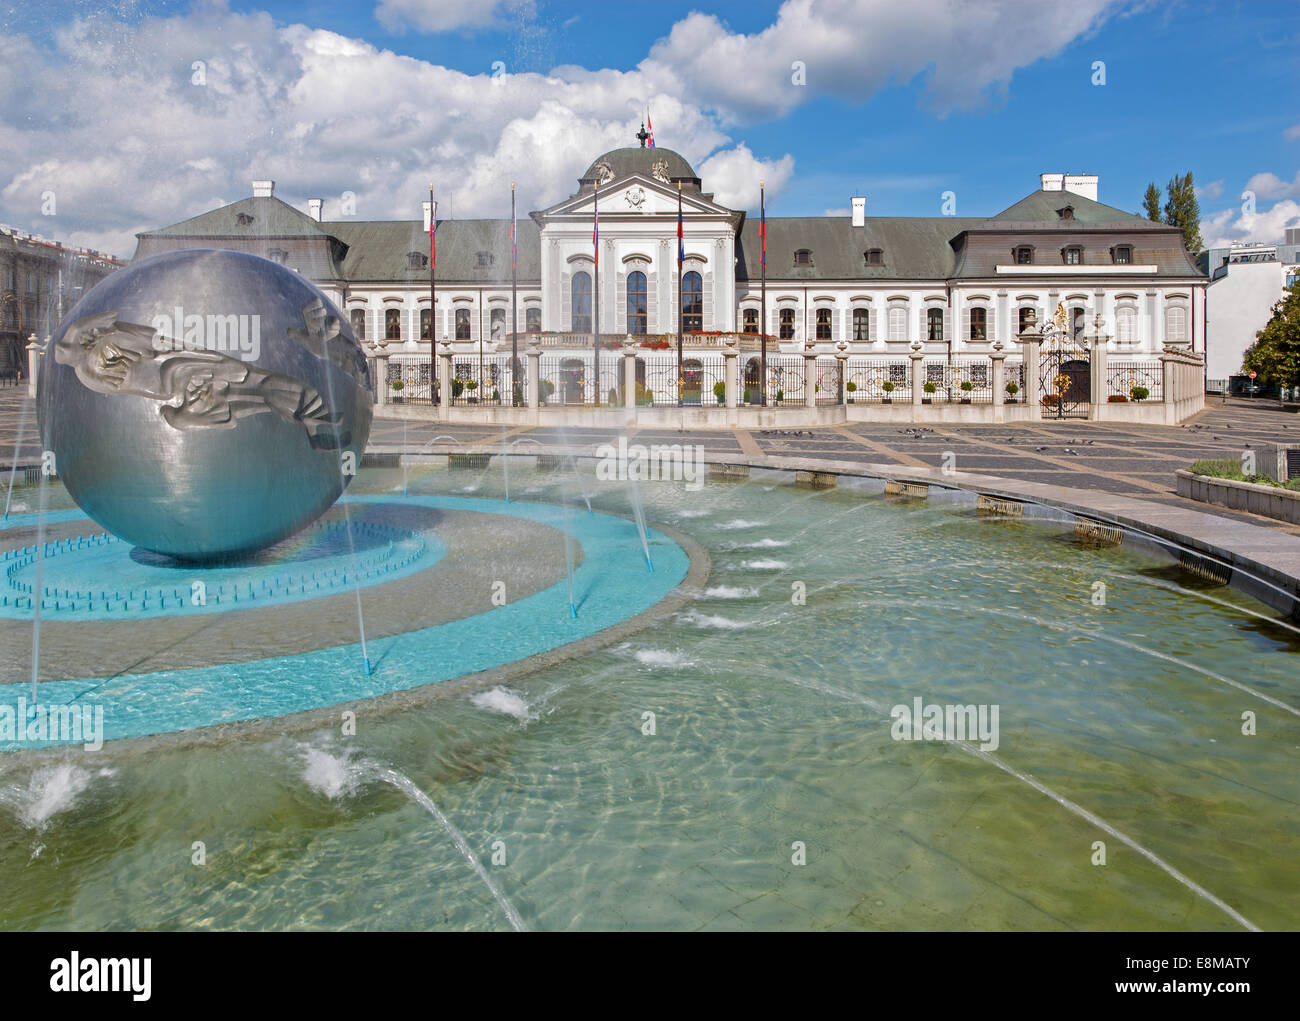 BRATISLAVA, Slowakei - 21. September 2014: The Presidents (oder Grasalkovic) Palast und Brunnen "Jugend" des Bildhauers Tibor Bartfay Stockfoto